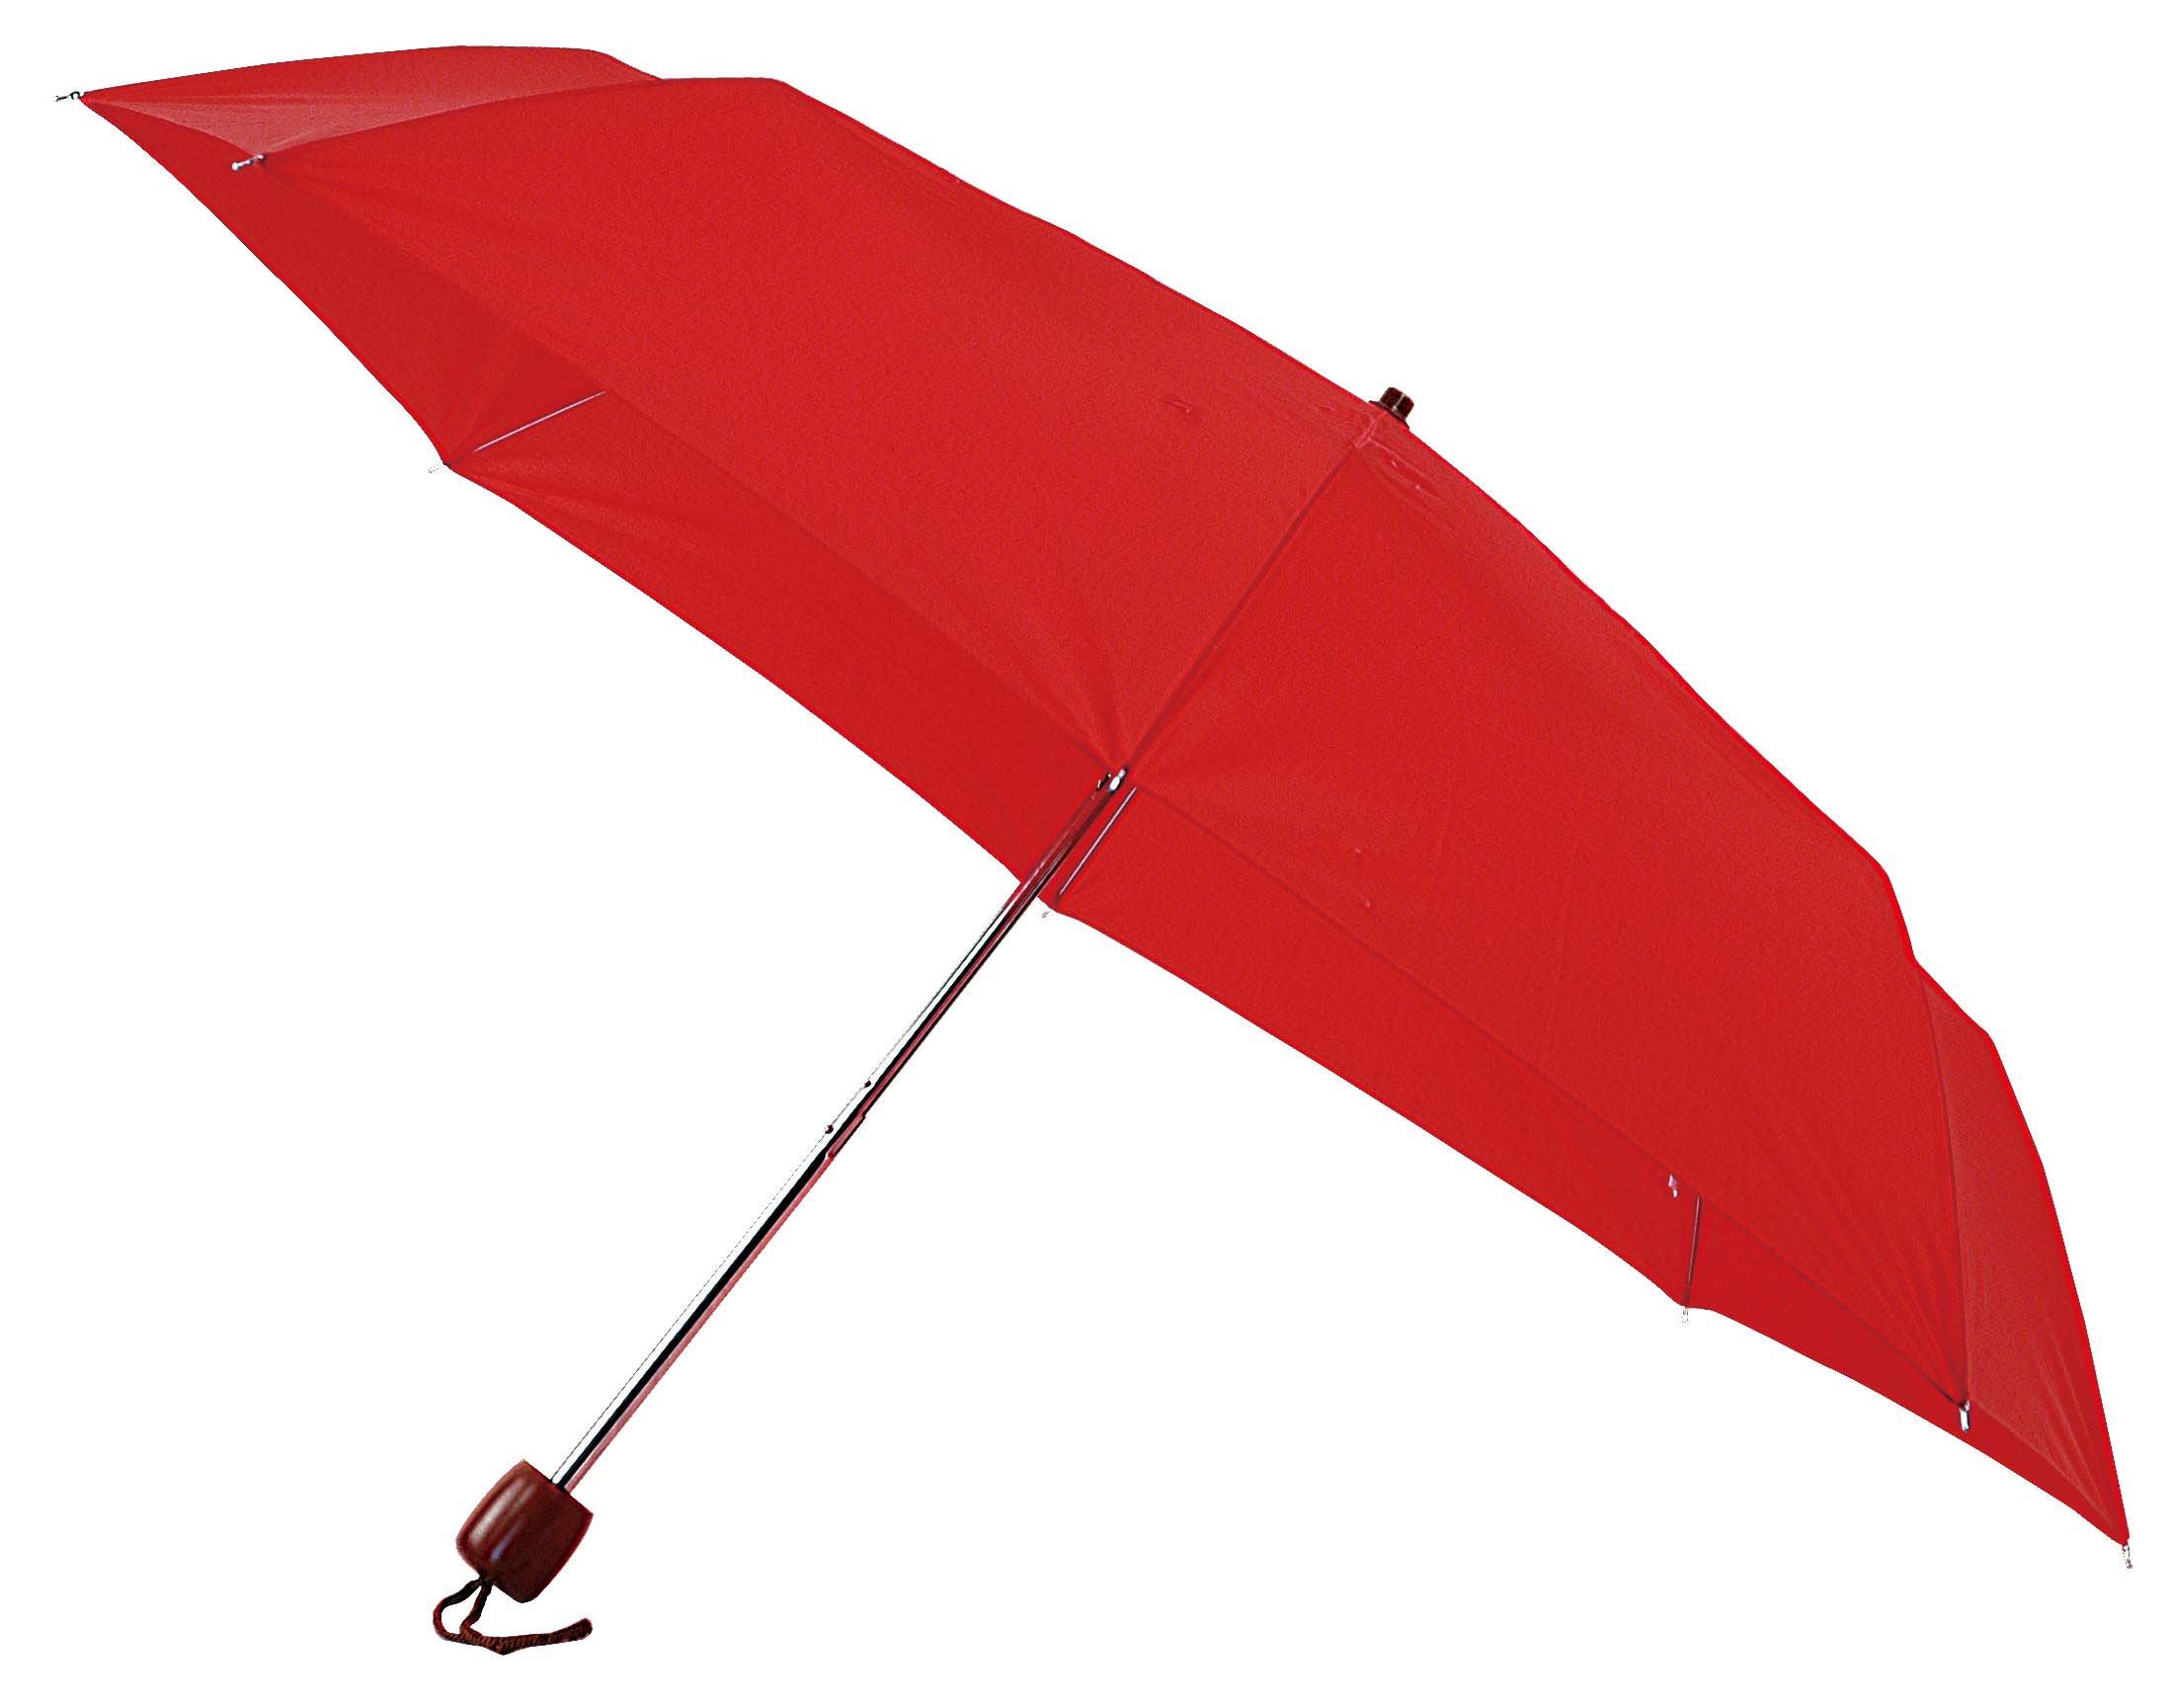 B1309 - The 43" Manual Folding Umbrella